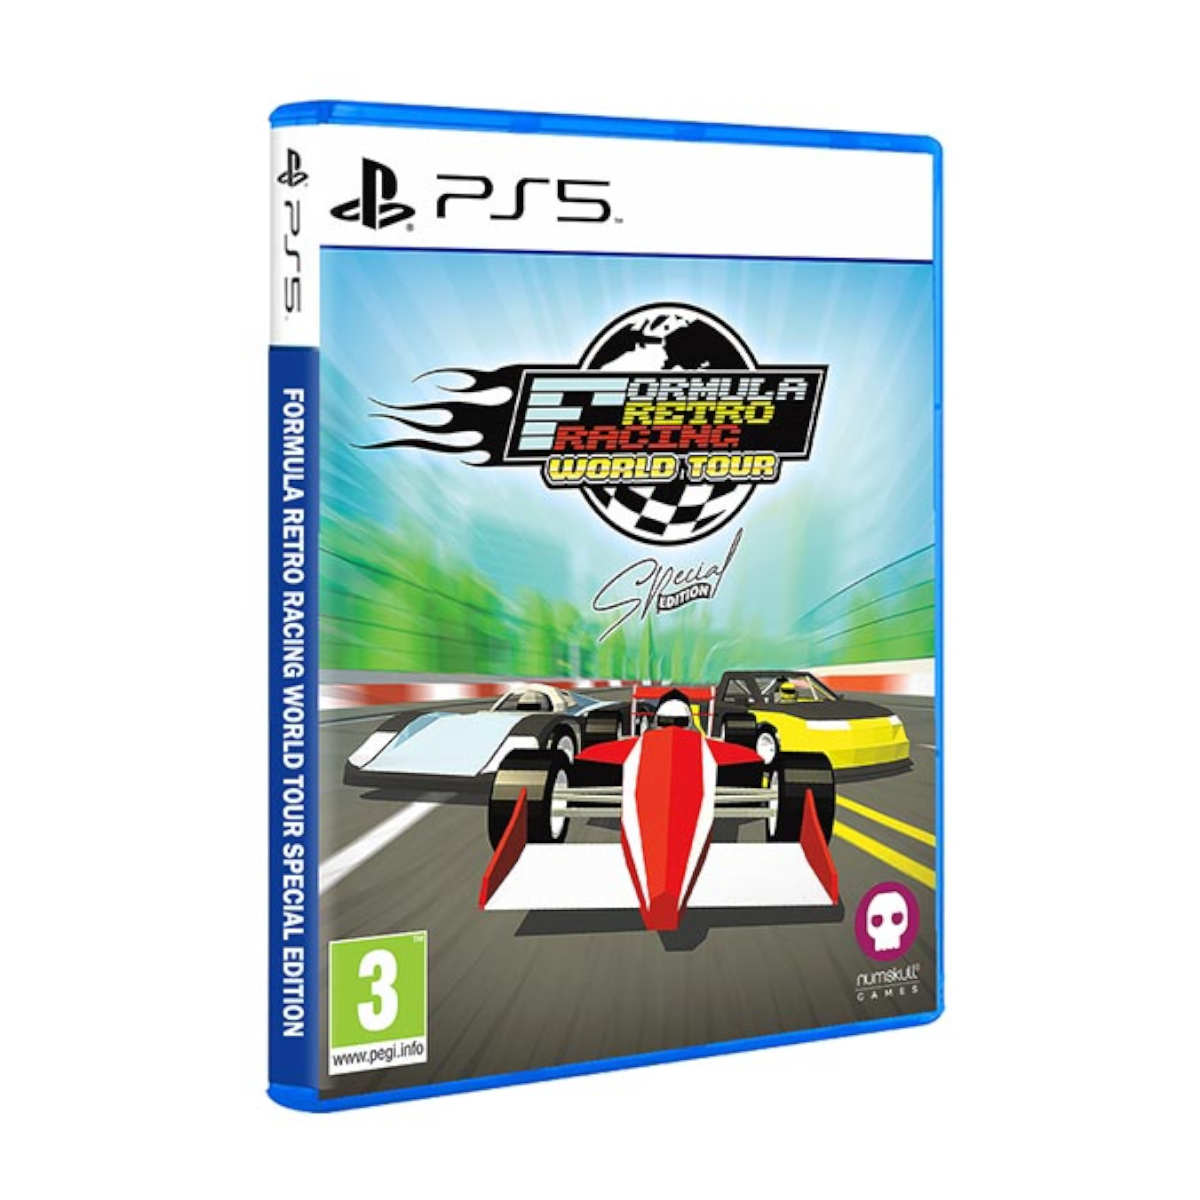 PS5 Tour Formula Edition Retro Special Racing World Buy